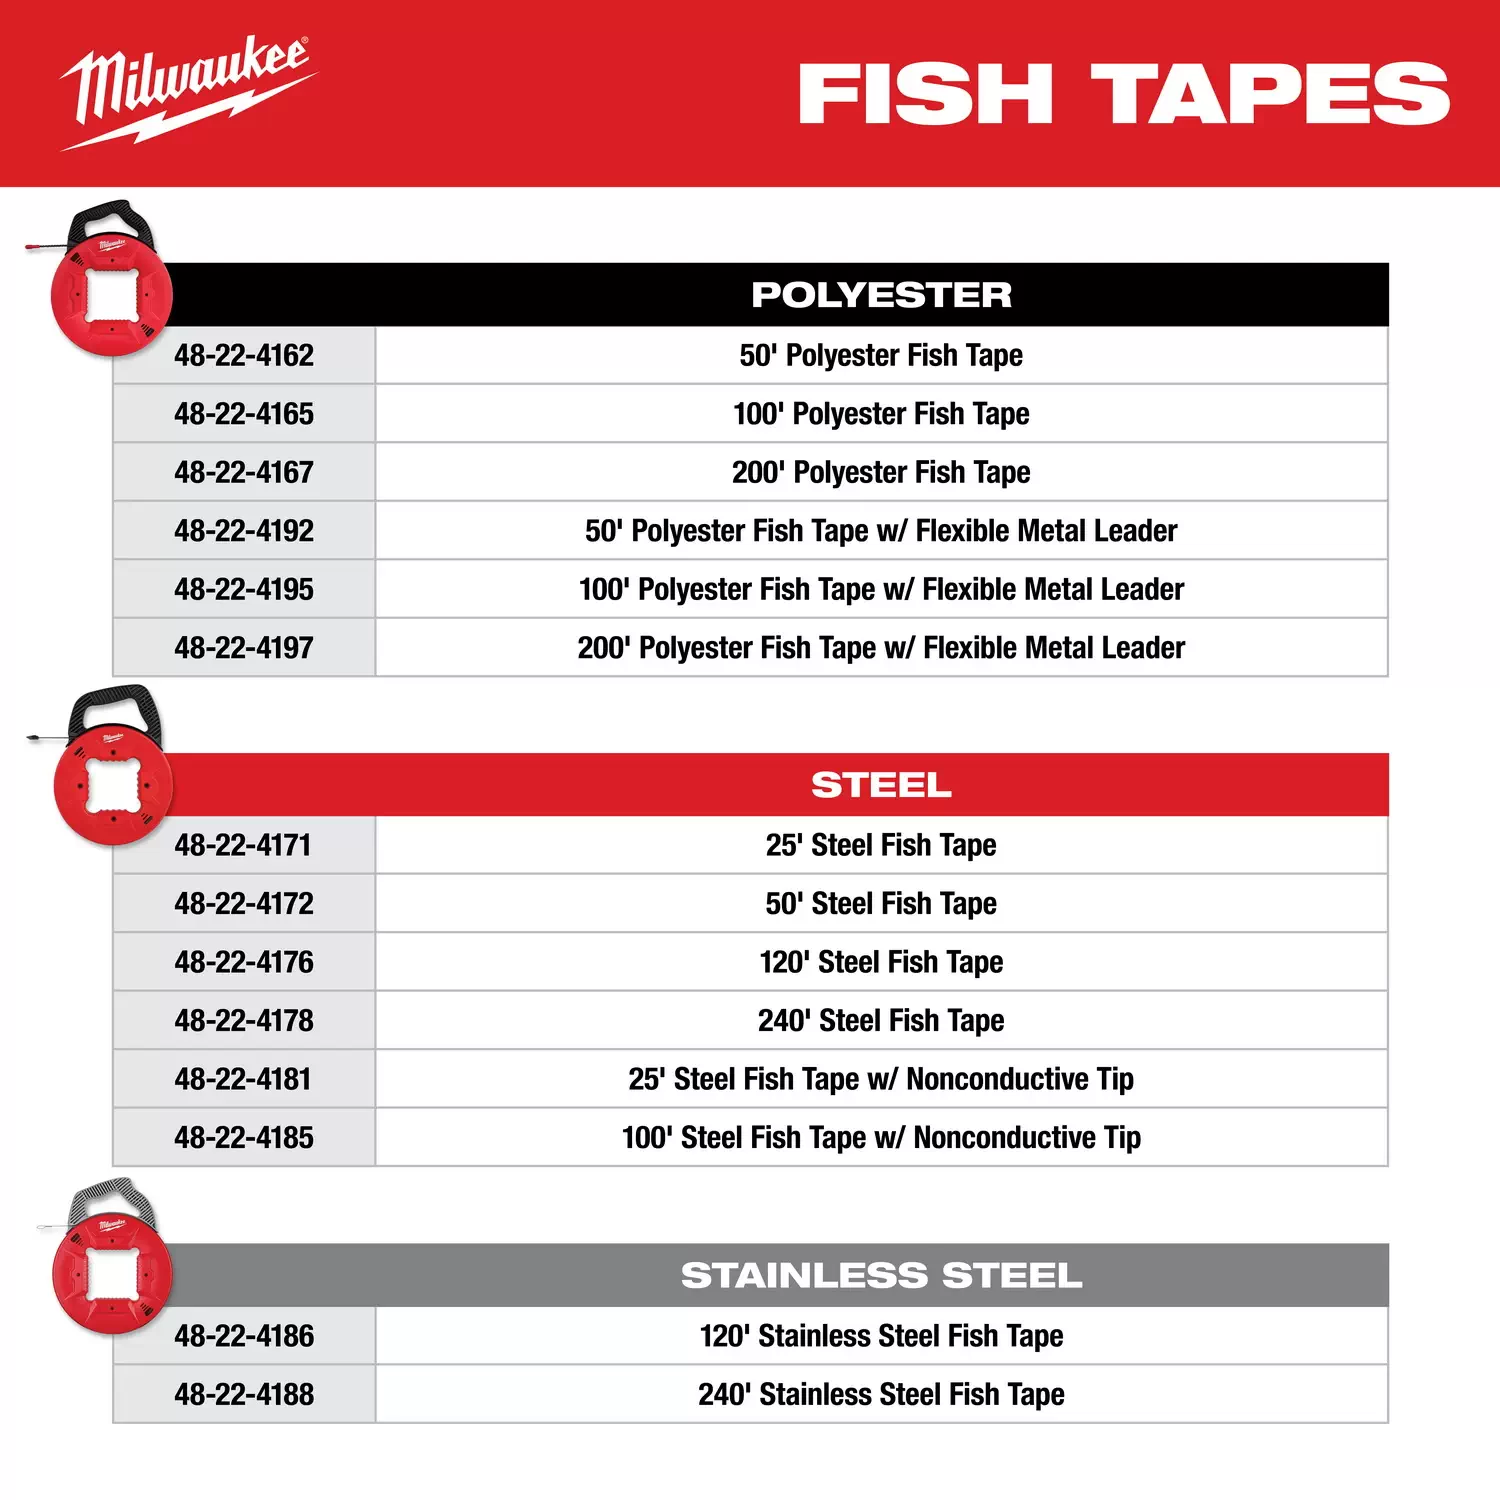 Milwaukee 48-22-4195 100′ Polyester Fish Tape w/ Flexible Metal Leader